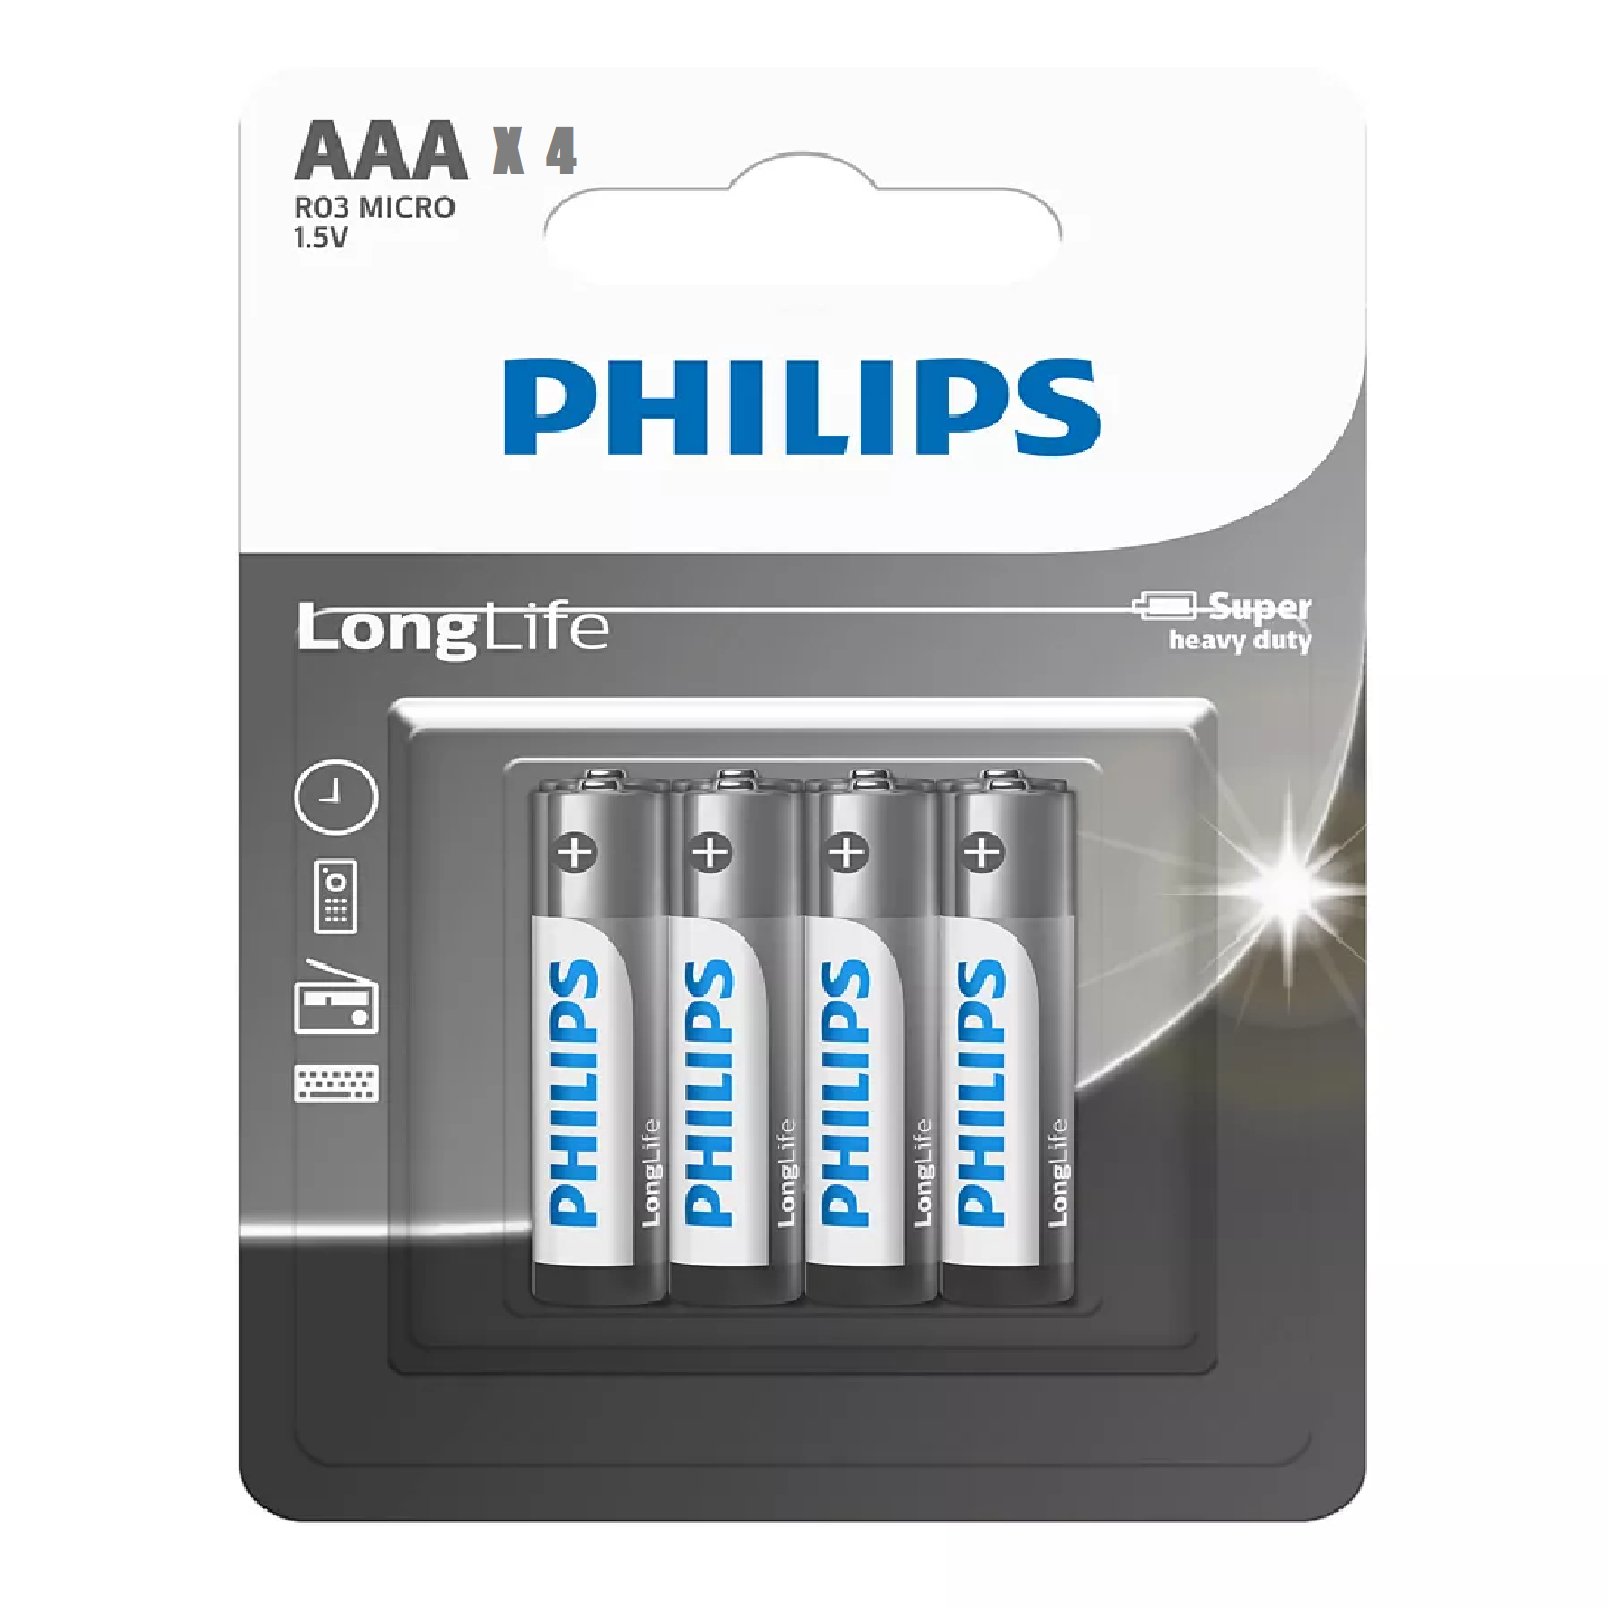 Philips 4AAA LONG LIFE Zinc Chloride Battery 4PC/PACK